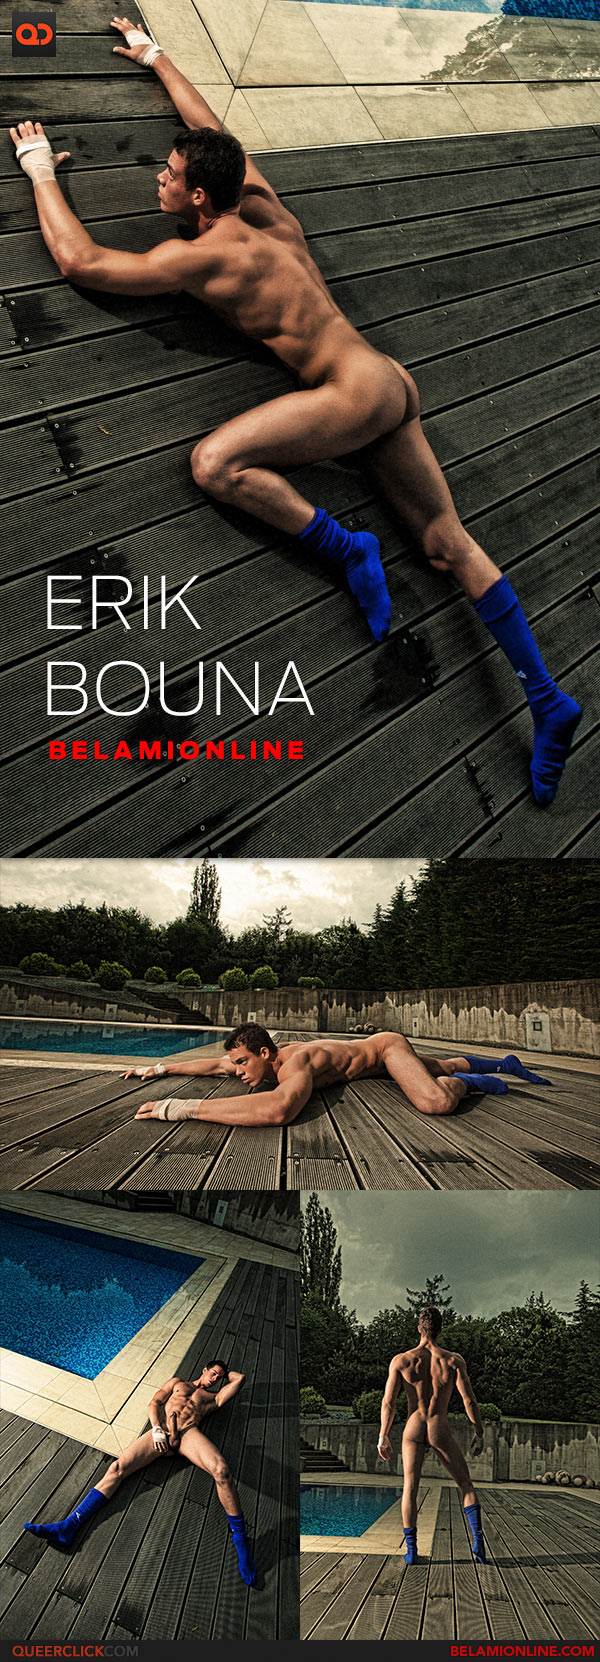 Bel Ami Online: Erik Bouna - Art Collection